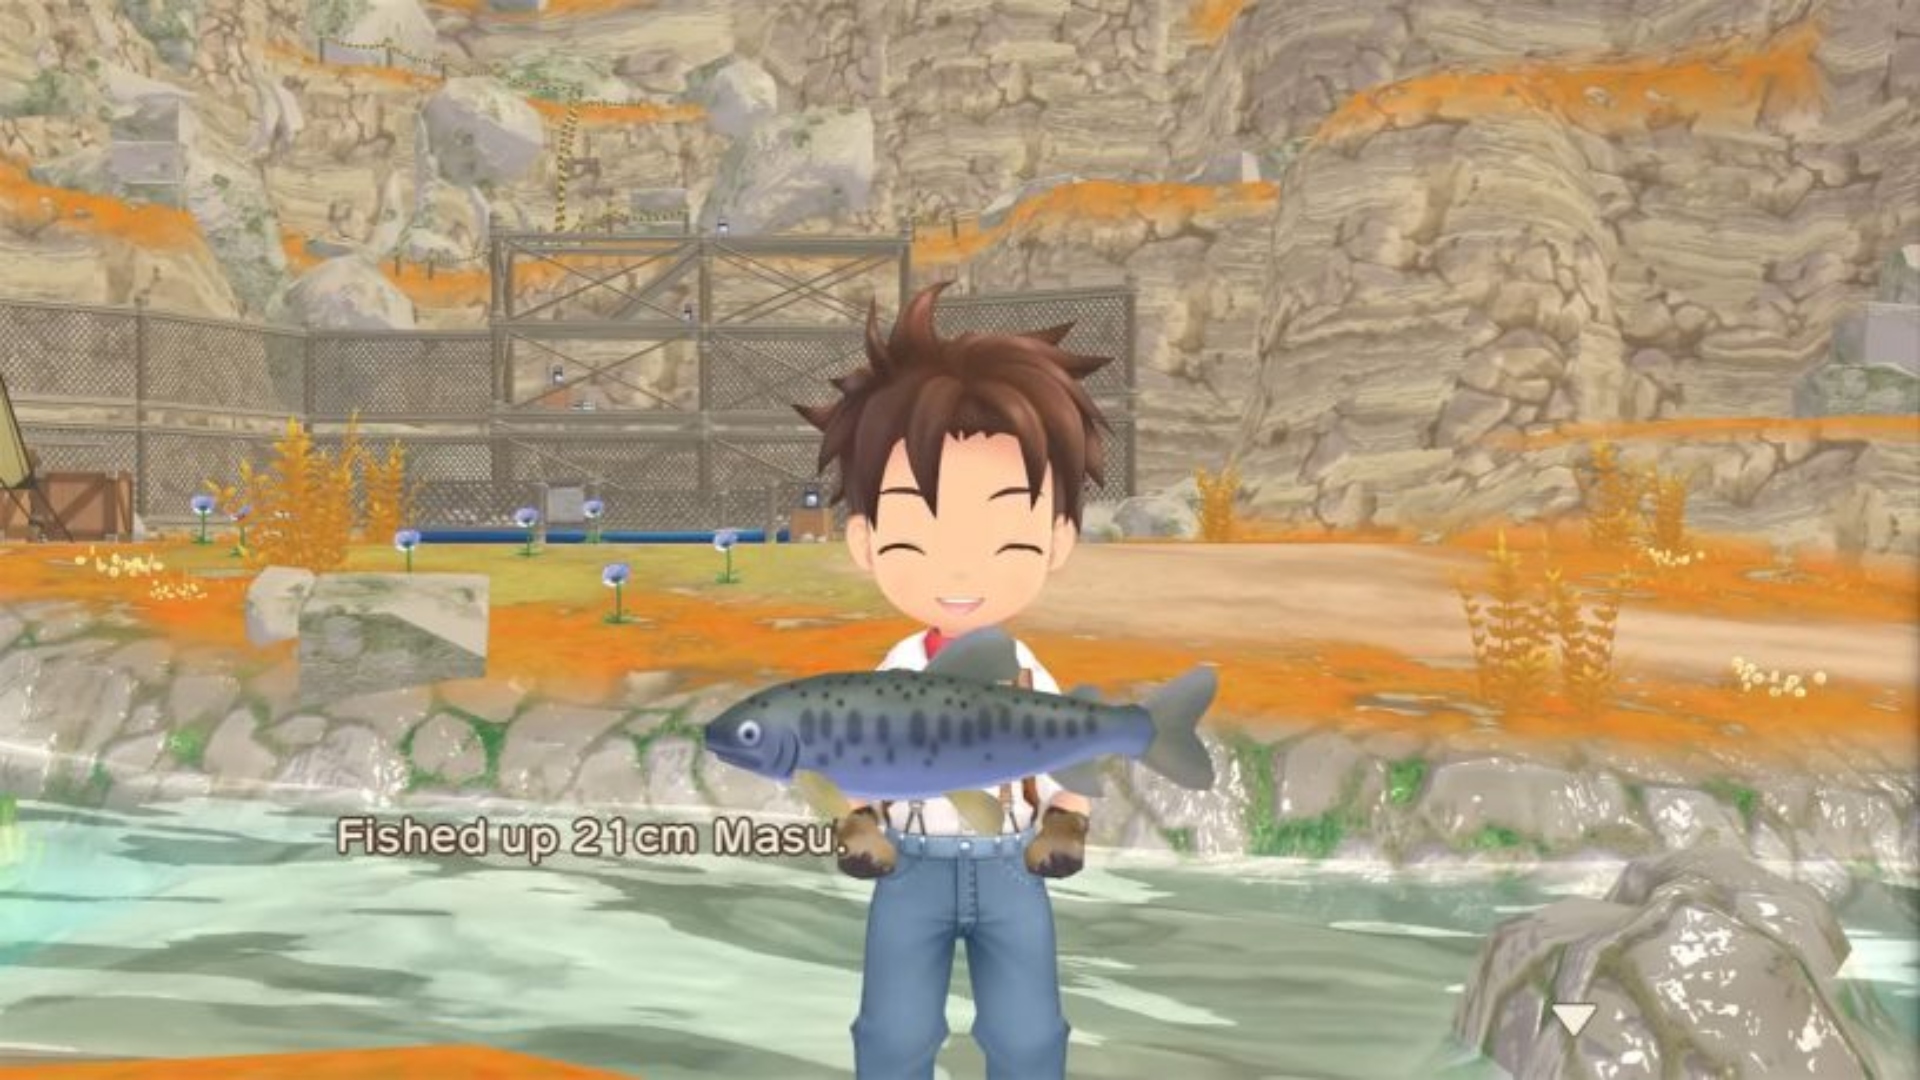 A player fishing up a Masu in Story of Seasons: A Wonderful Life.